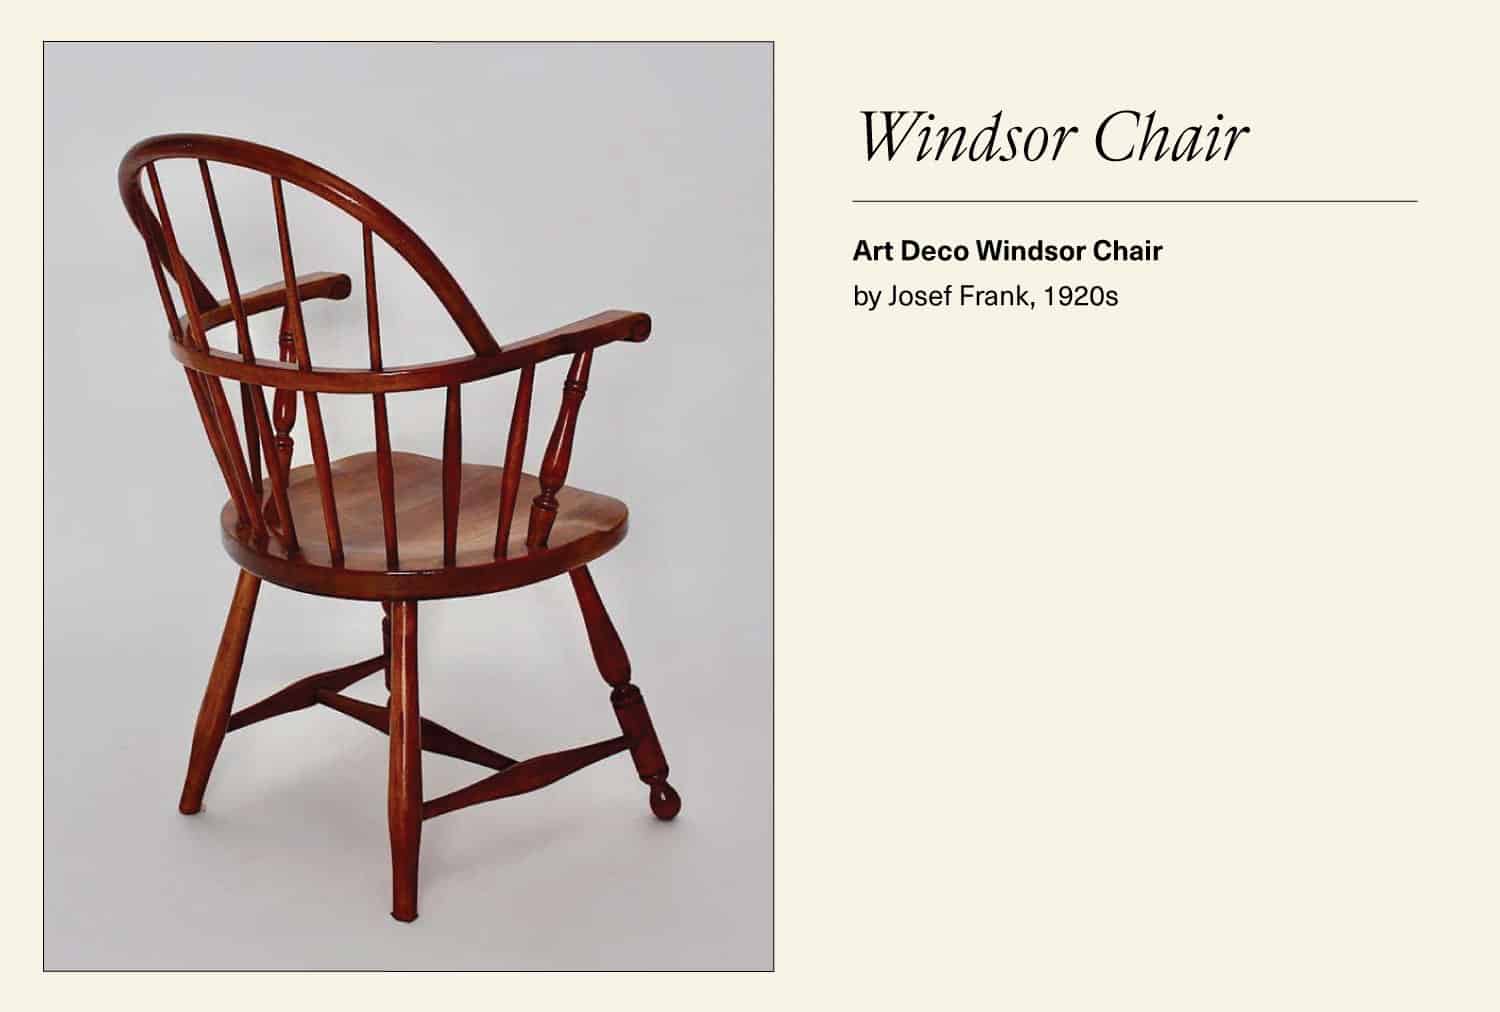 Wooden Windsor chair